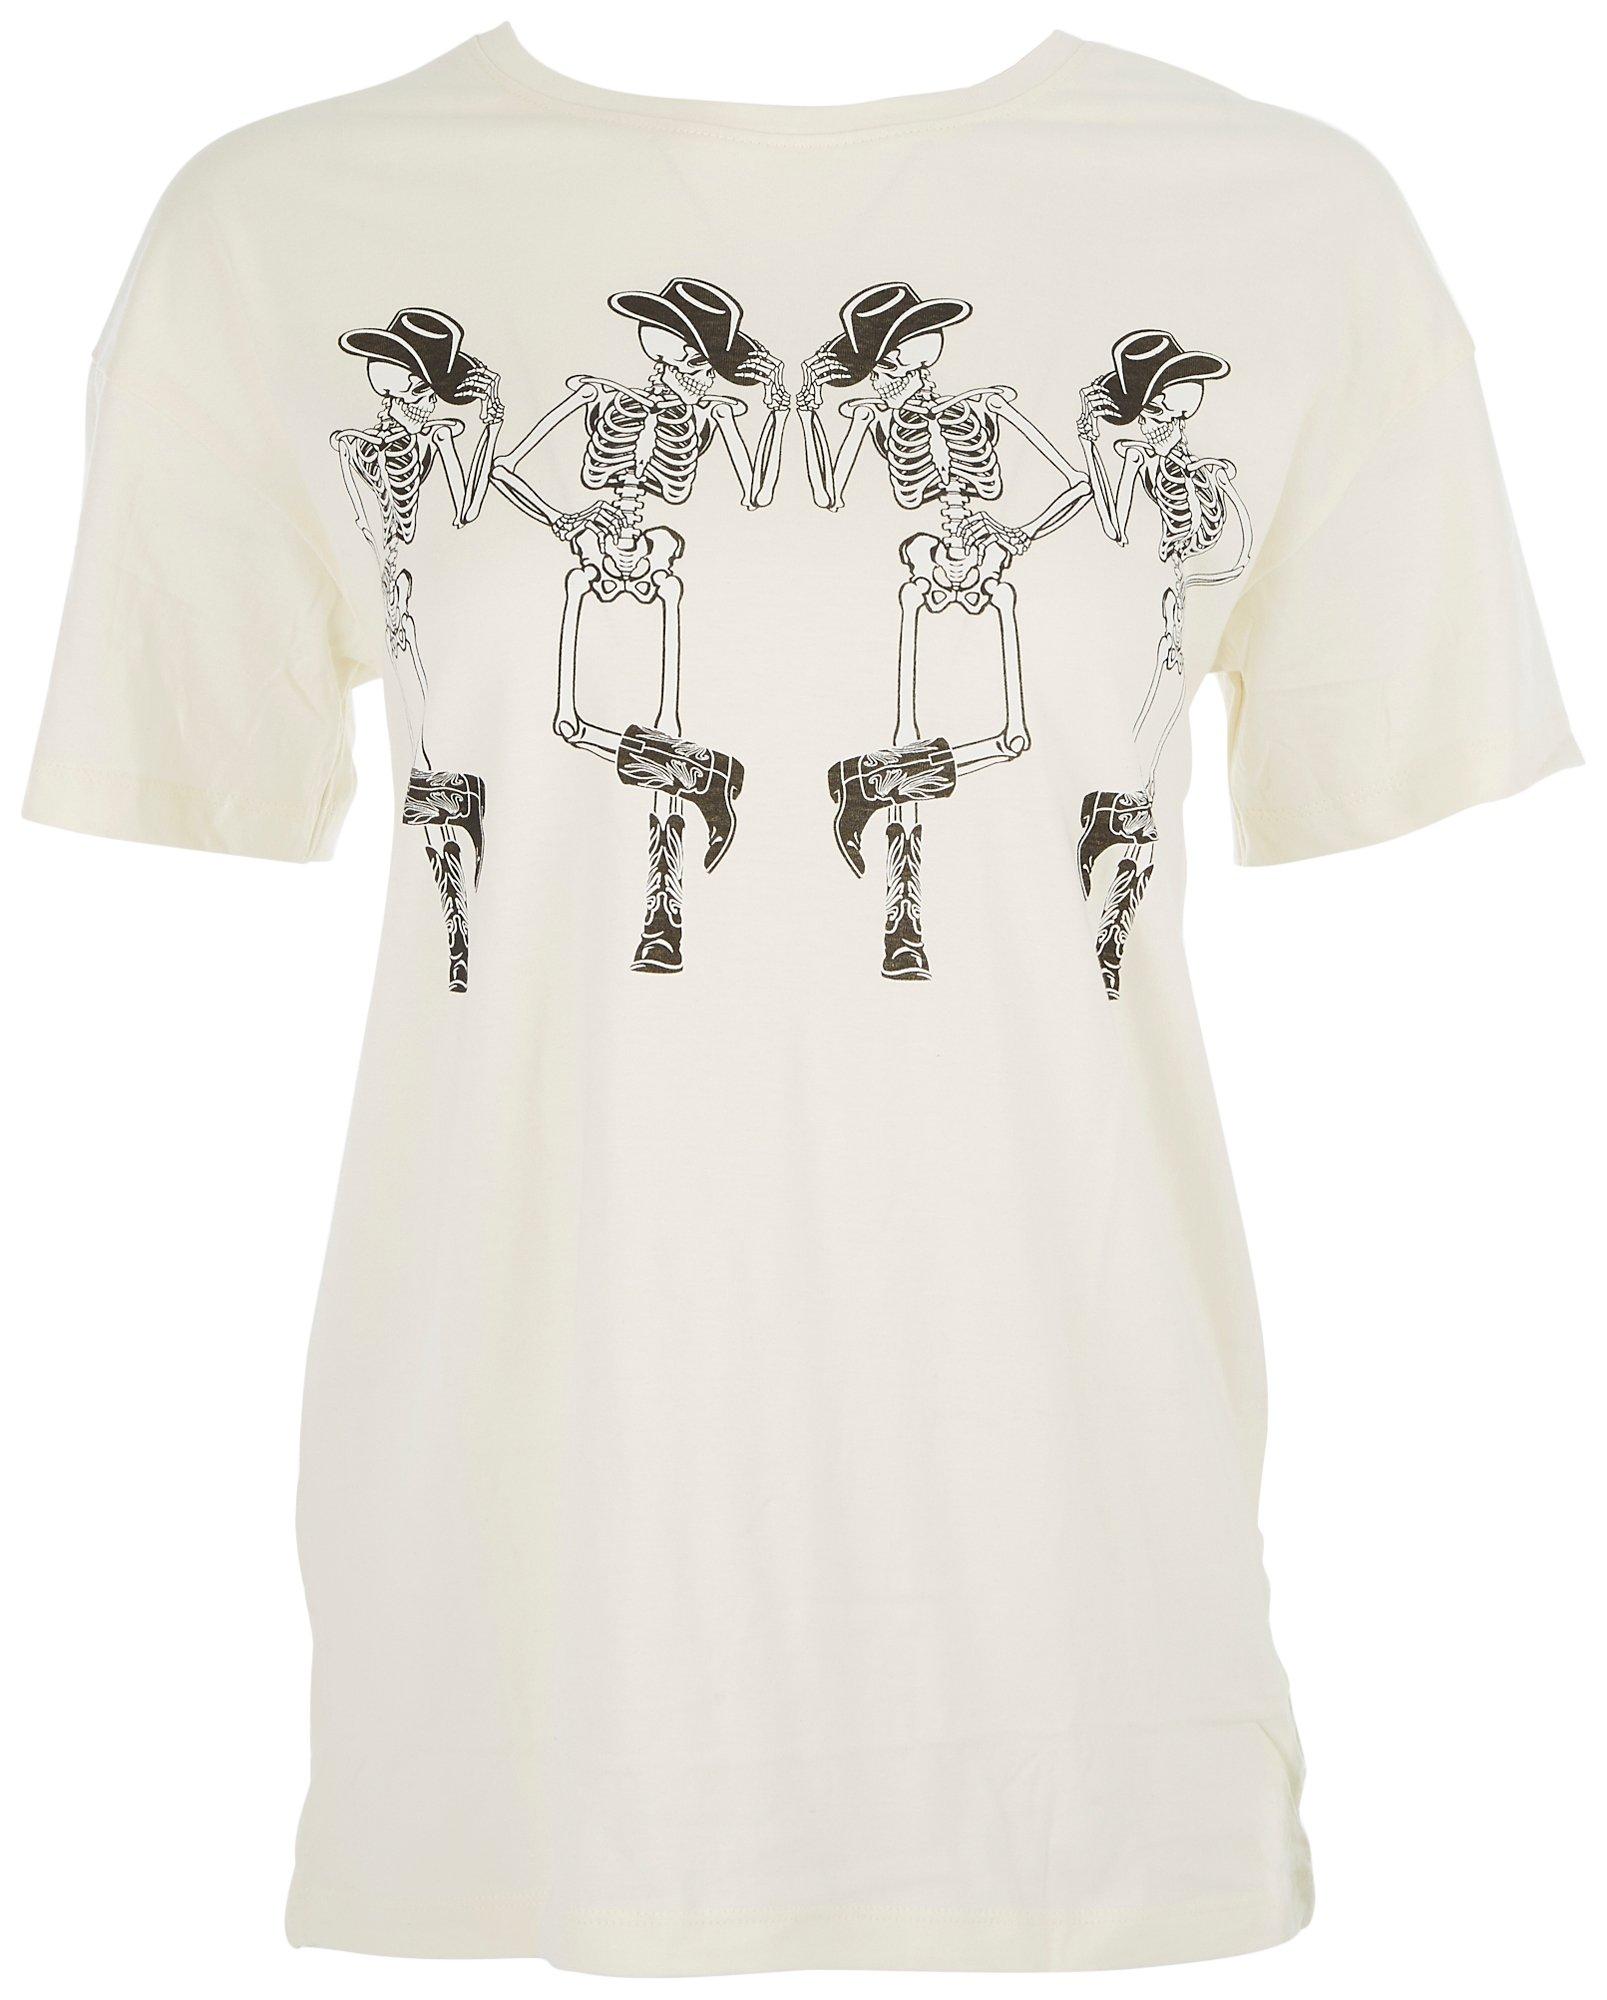 Juniors Rodeo Skeletons T-shirt